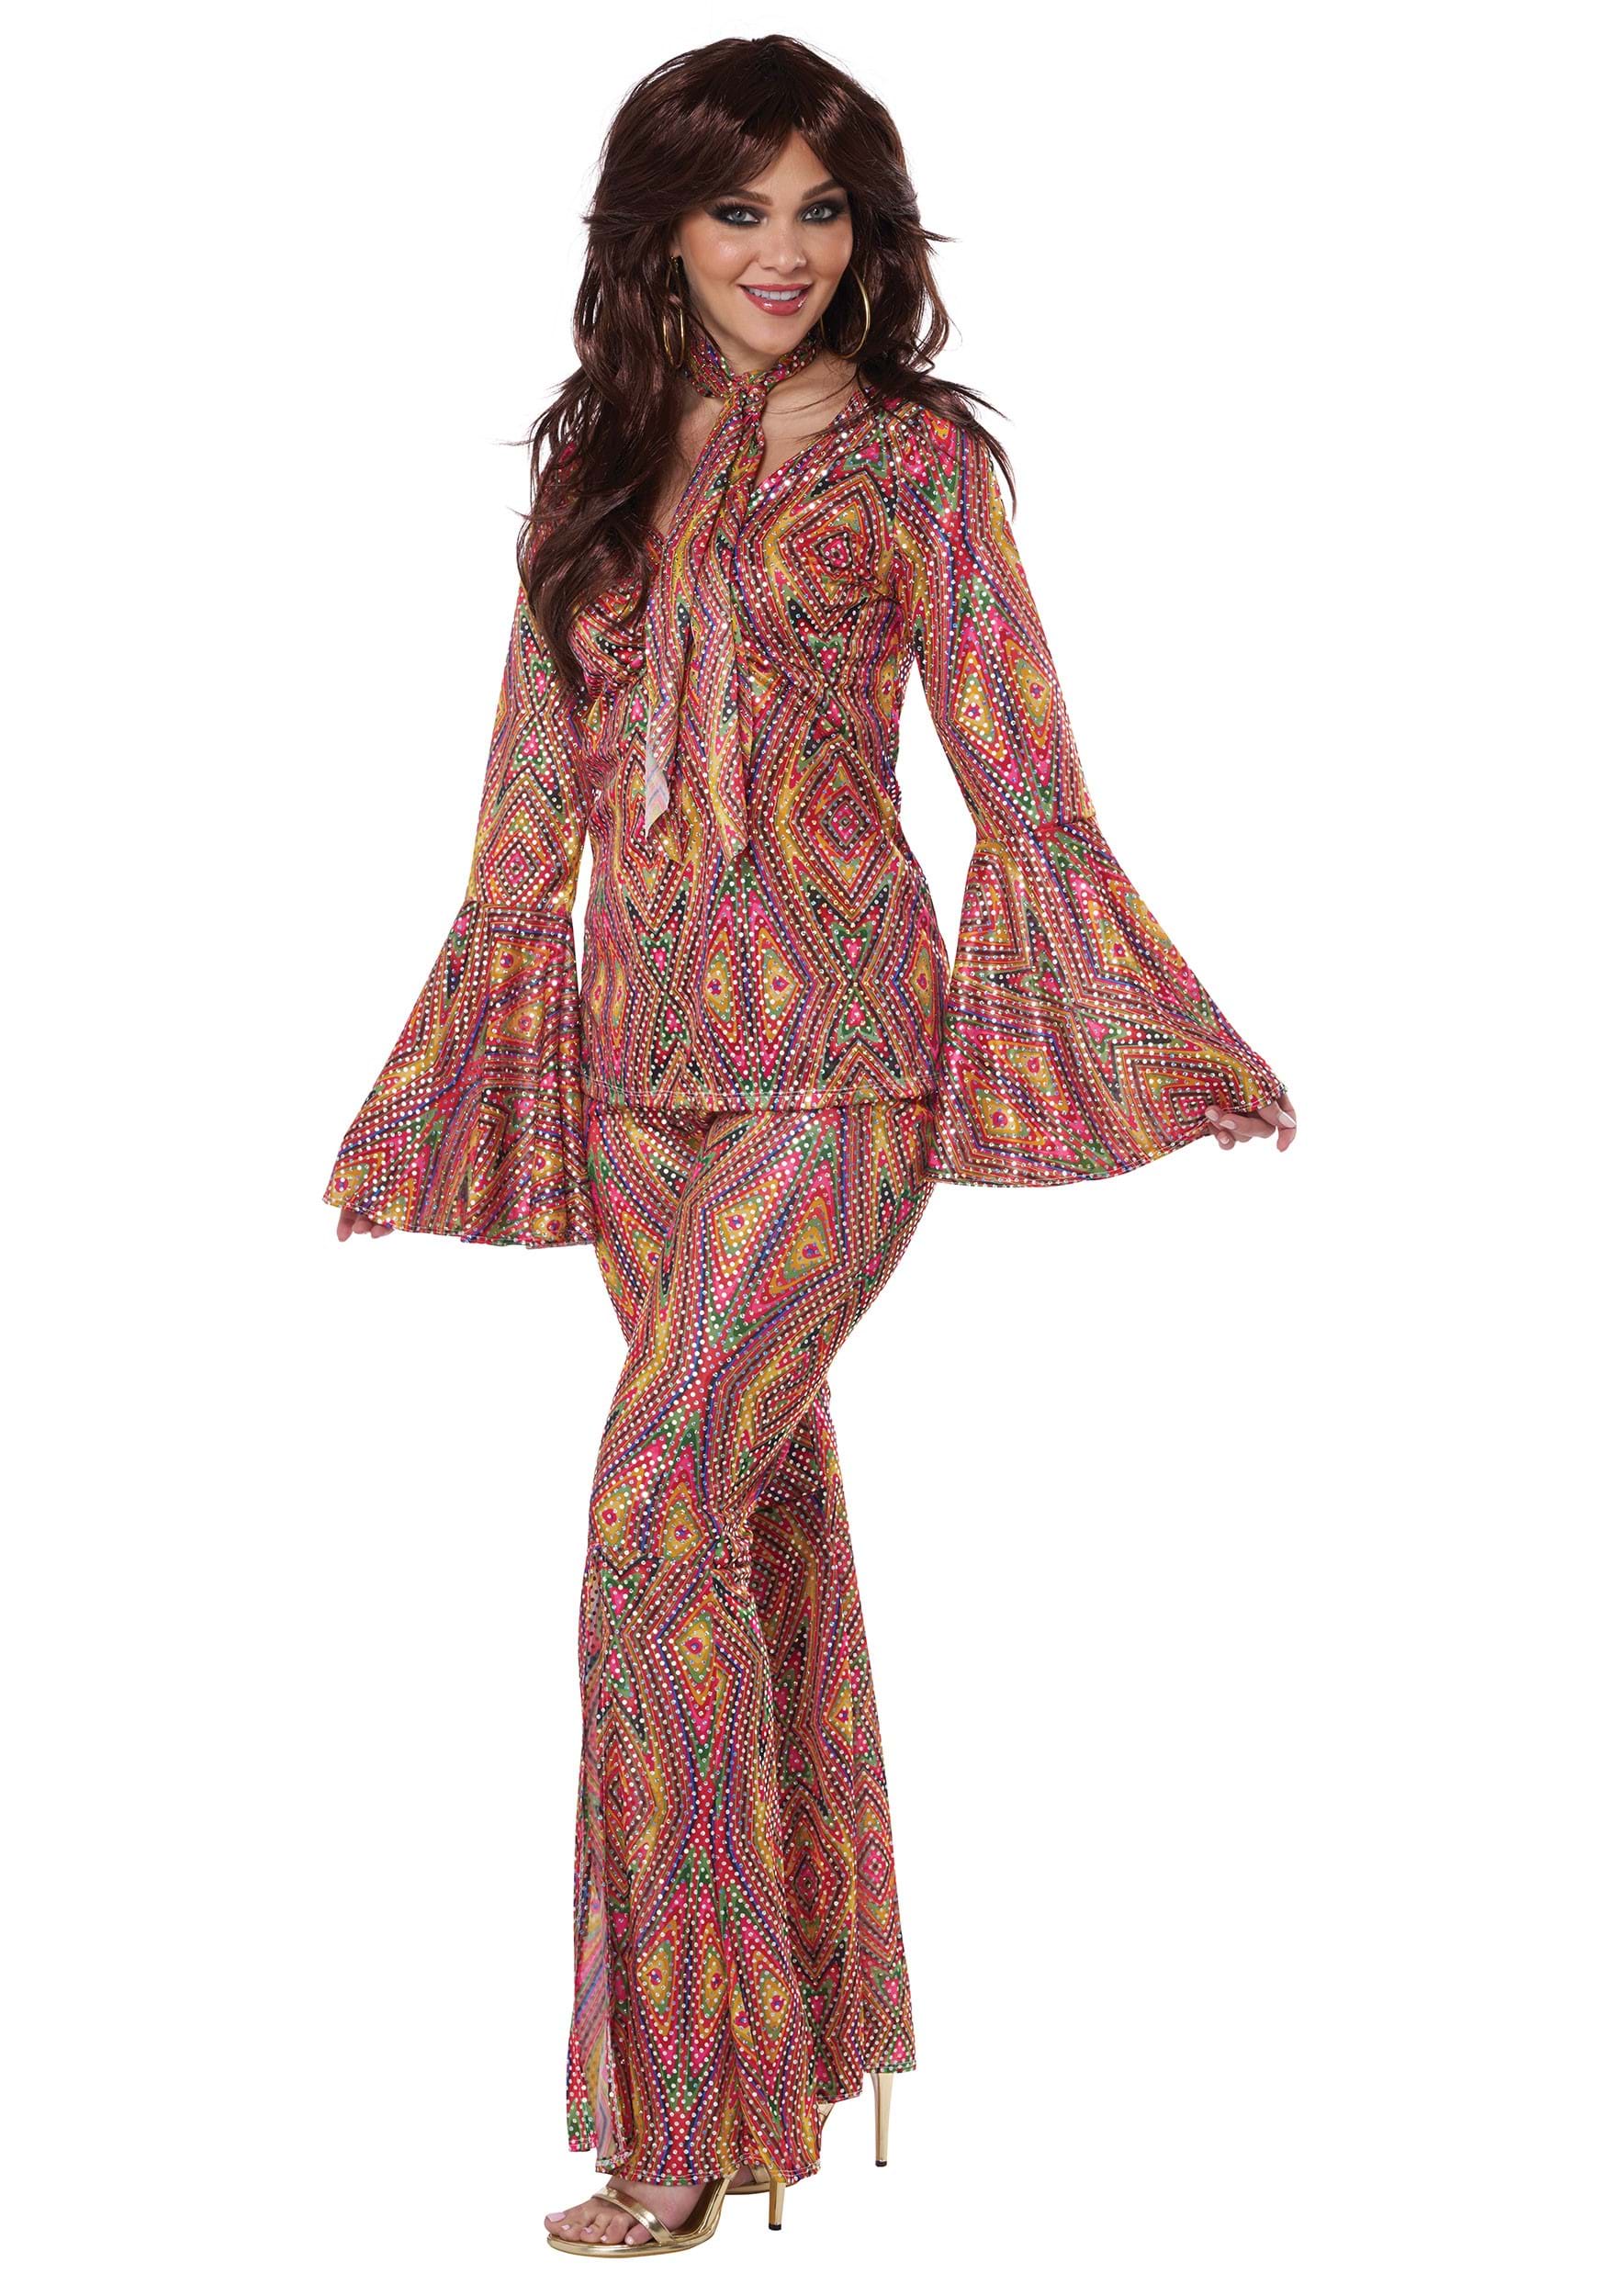 Women's 1970s DiscoLicious Fancy Dress Costume , Decade Fancy Dress Costumes